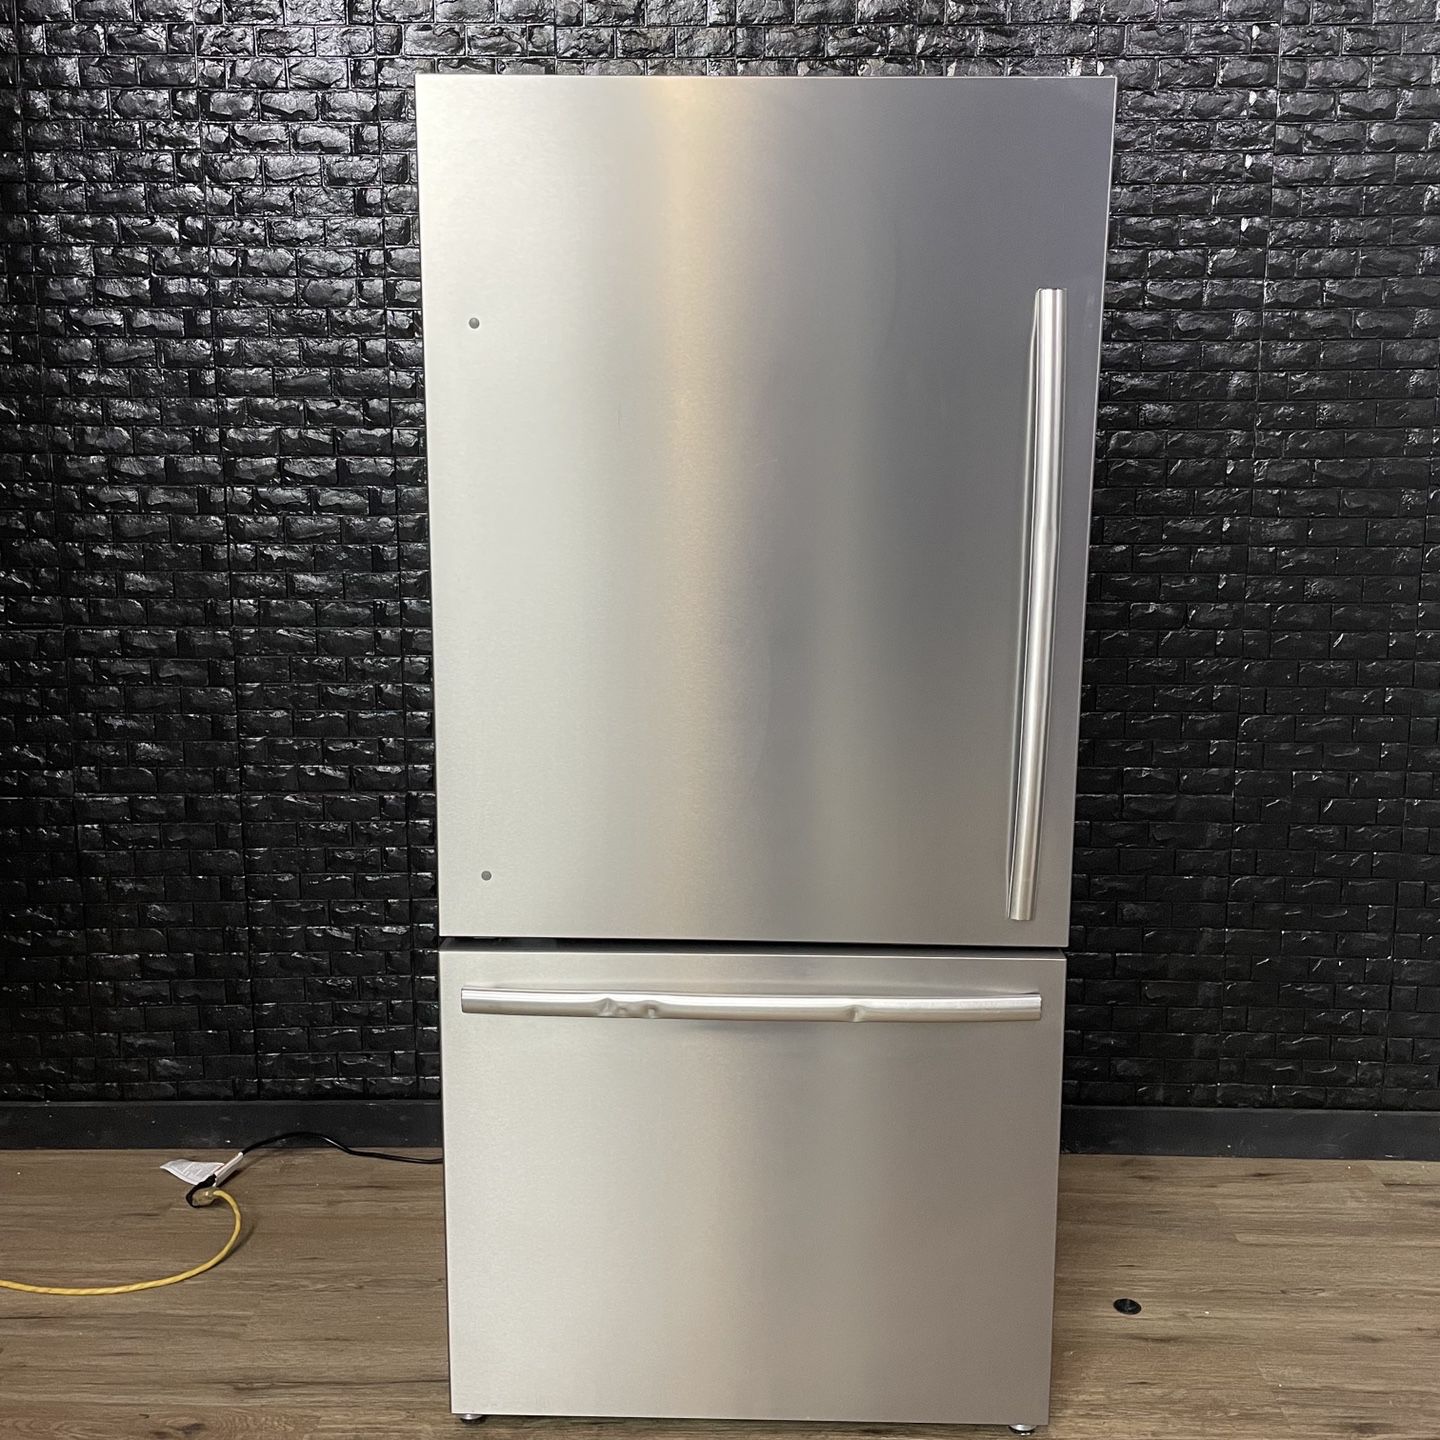 Mora Refrigerator w/Warranty! R1698A